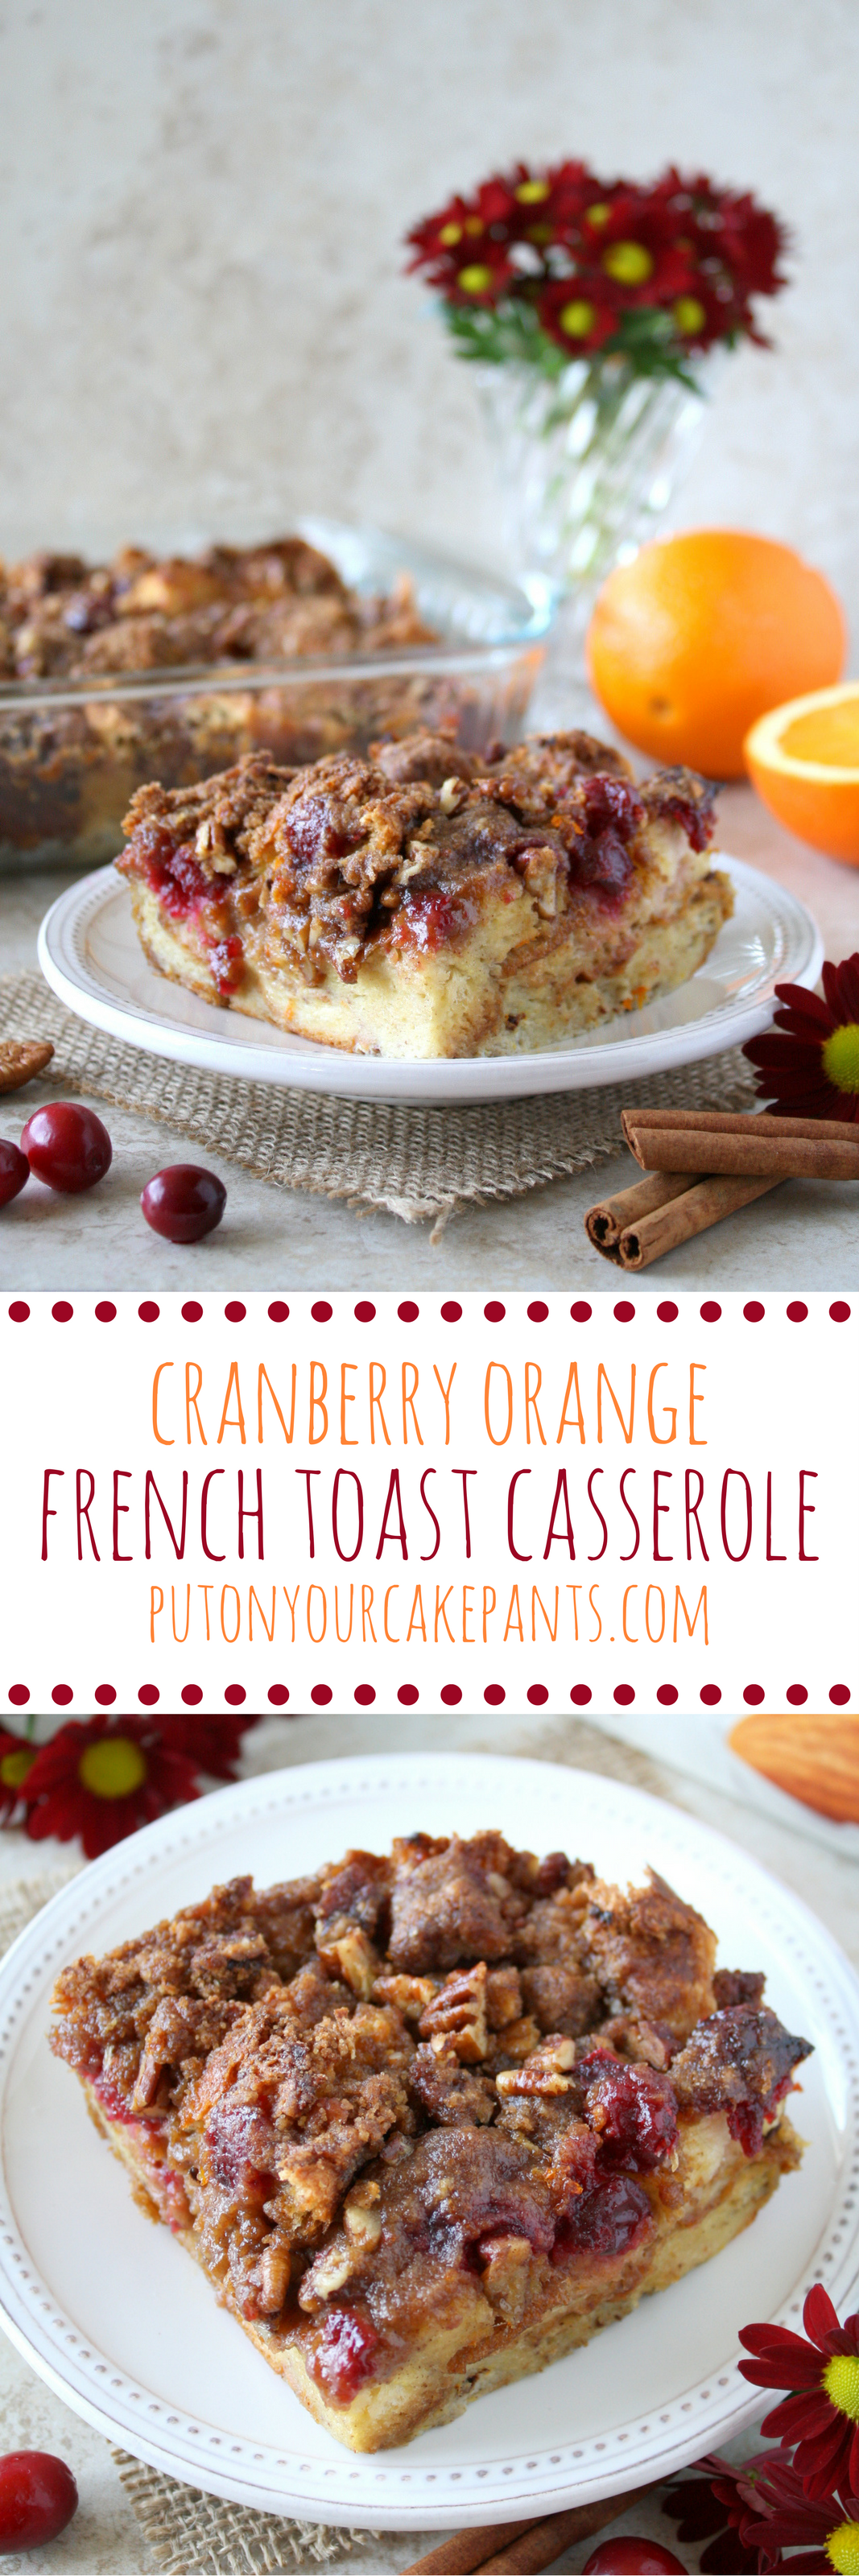 cranberry orange French toast casserole #SameSilkySmoothTaste #shop